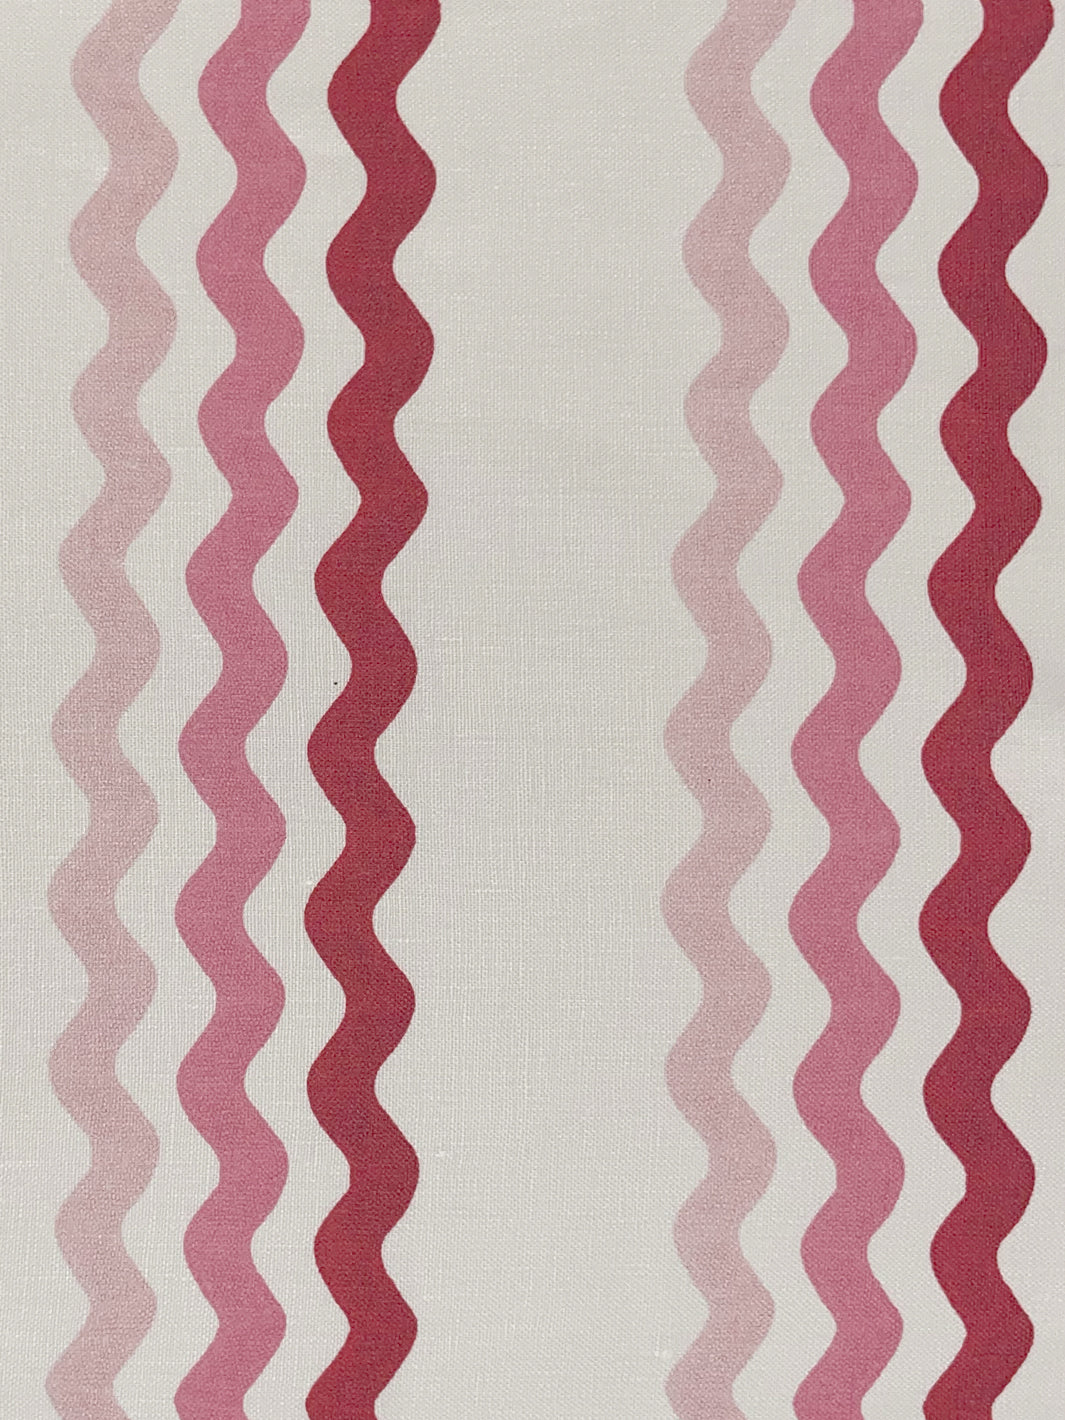 'Ric Rac Bands' Linen Fabric by Sarah Jessica Parker - Pink Slipper